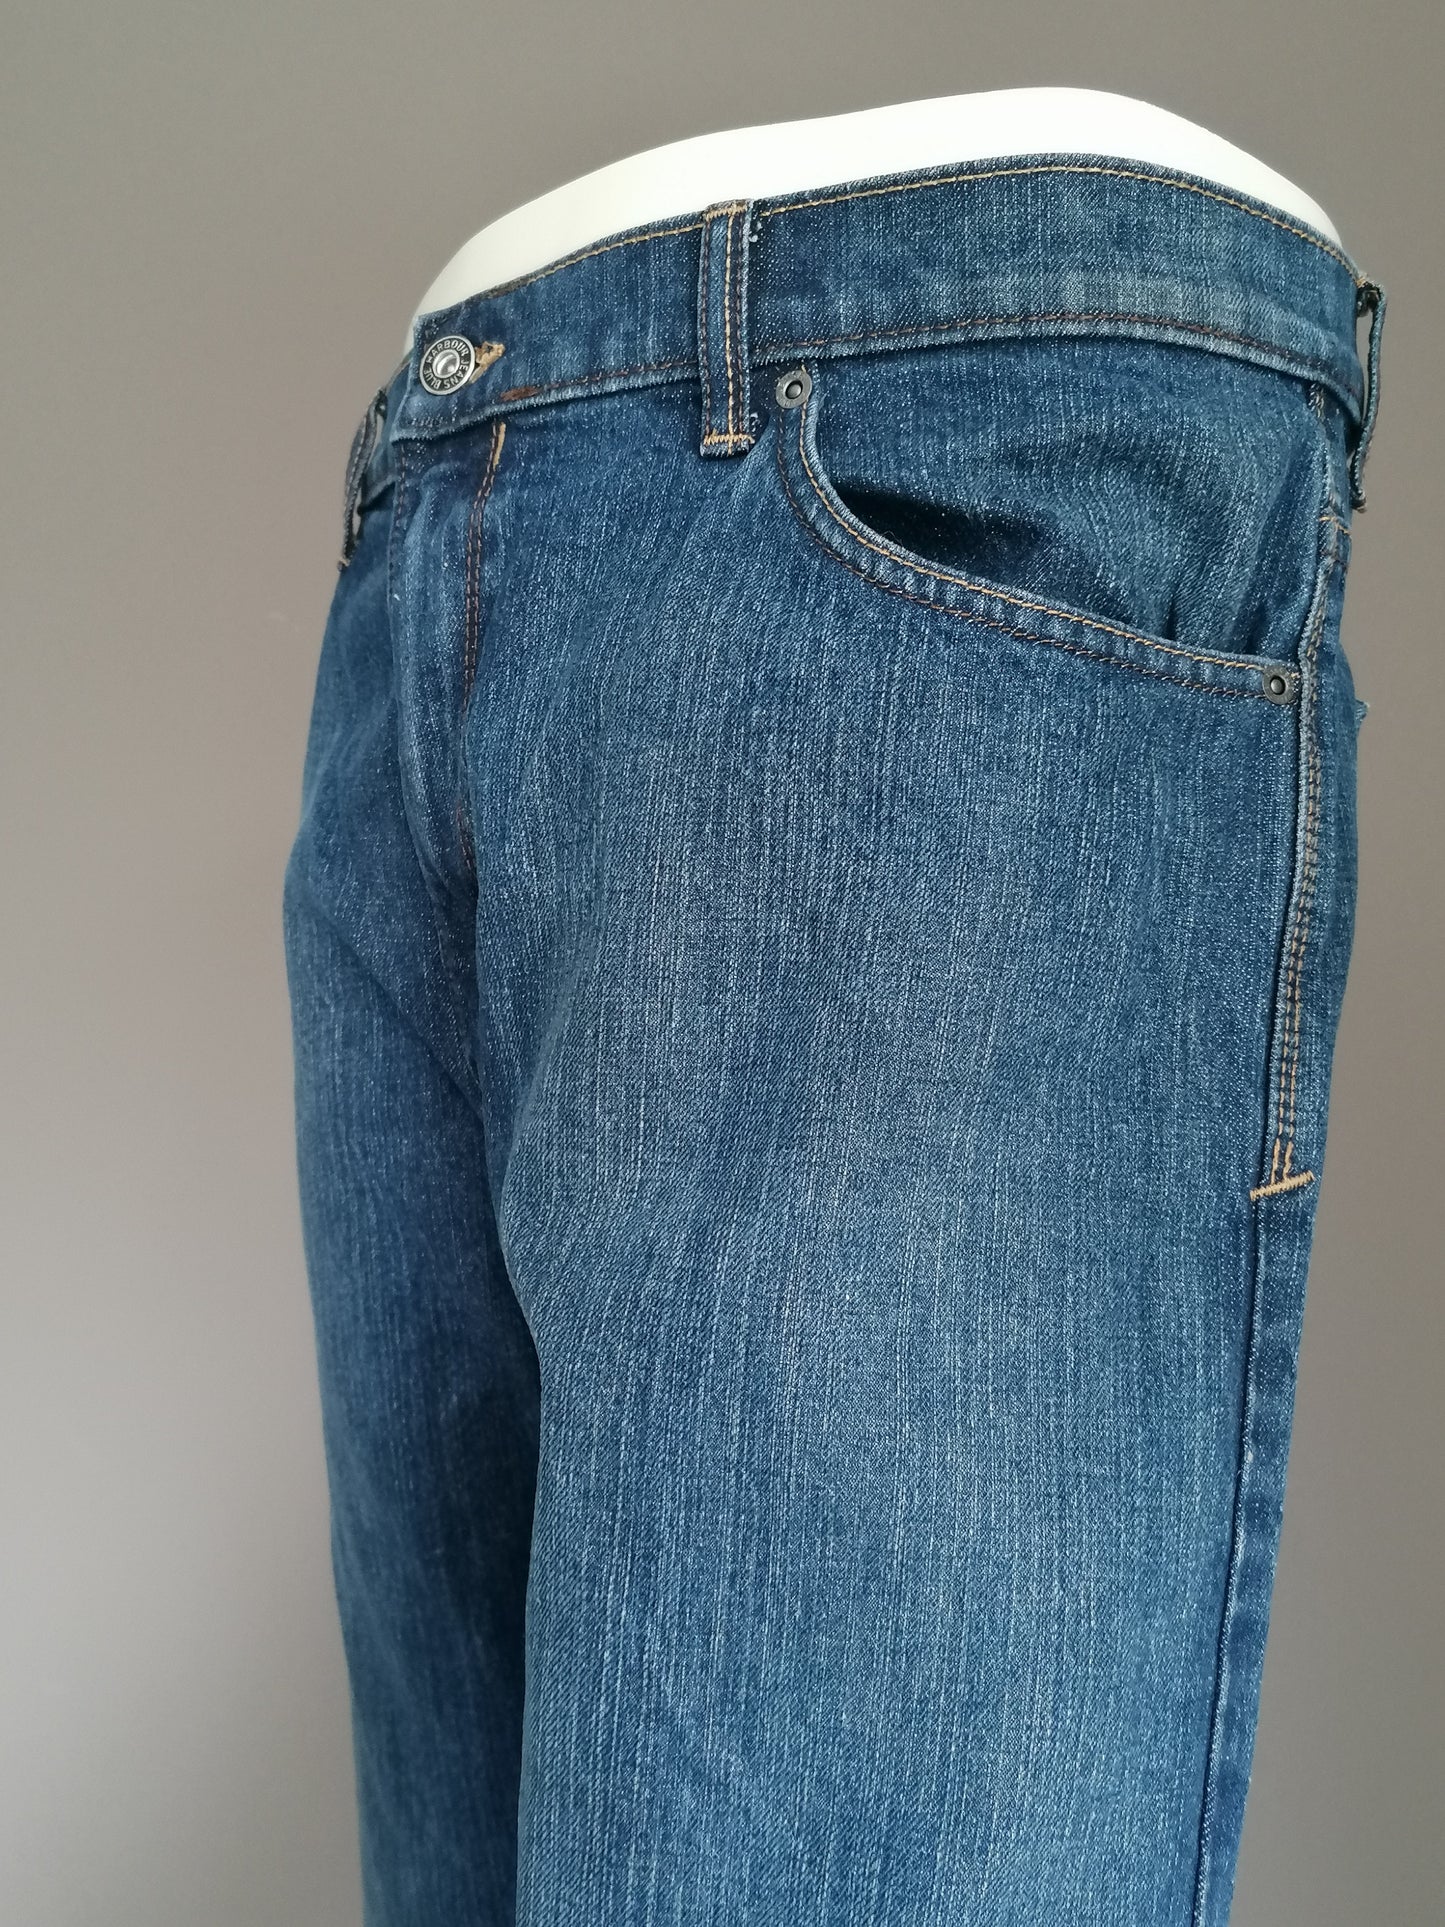 Blue Harbour Jeans. Color azul oscuro. Tamaño W38 - L30.